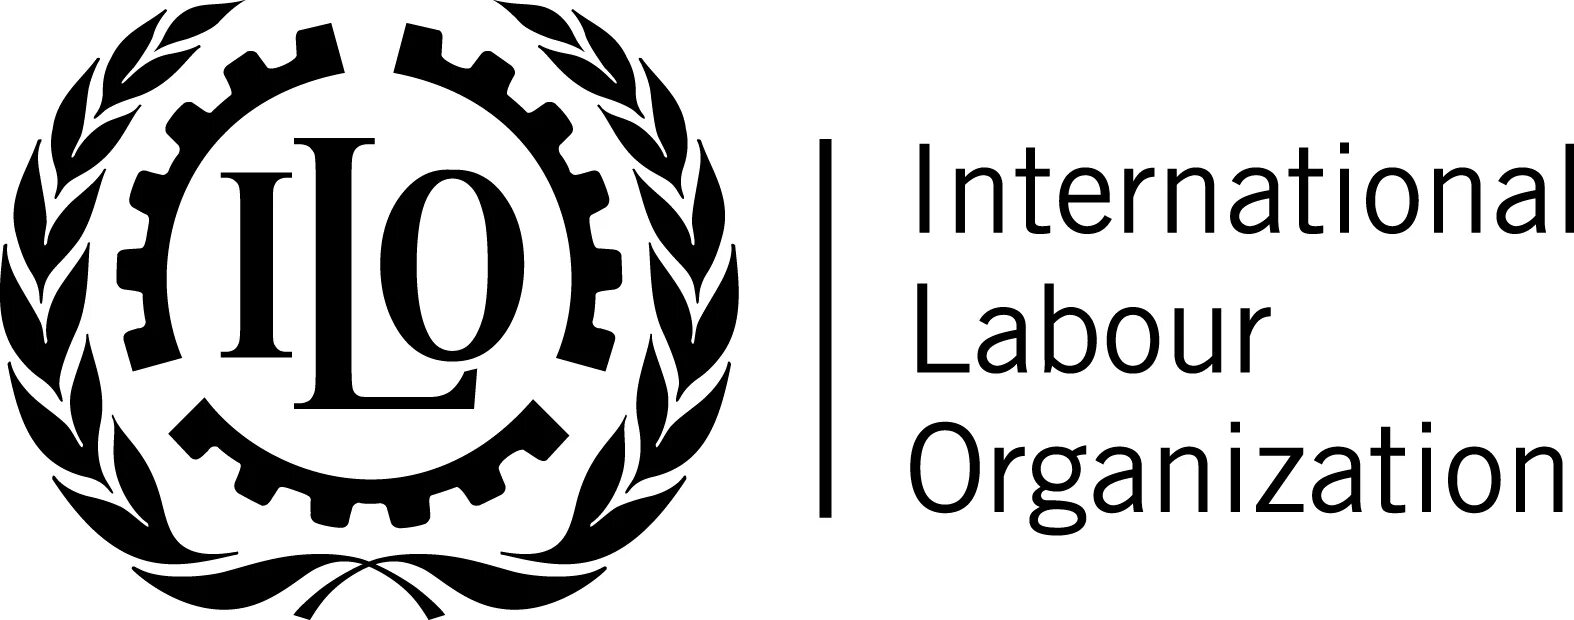 Мот Международная организация. Мот Международная организация труда. Международная организация труда (мот) лого. Эмблема мот ООН.